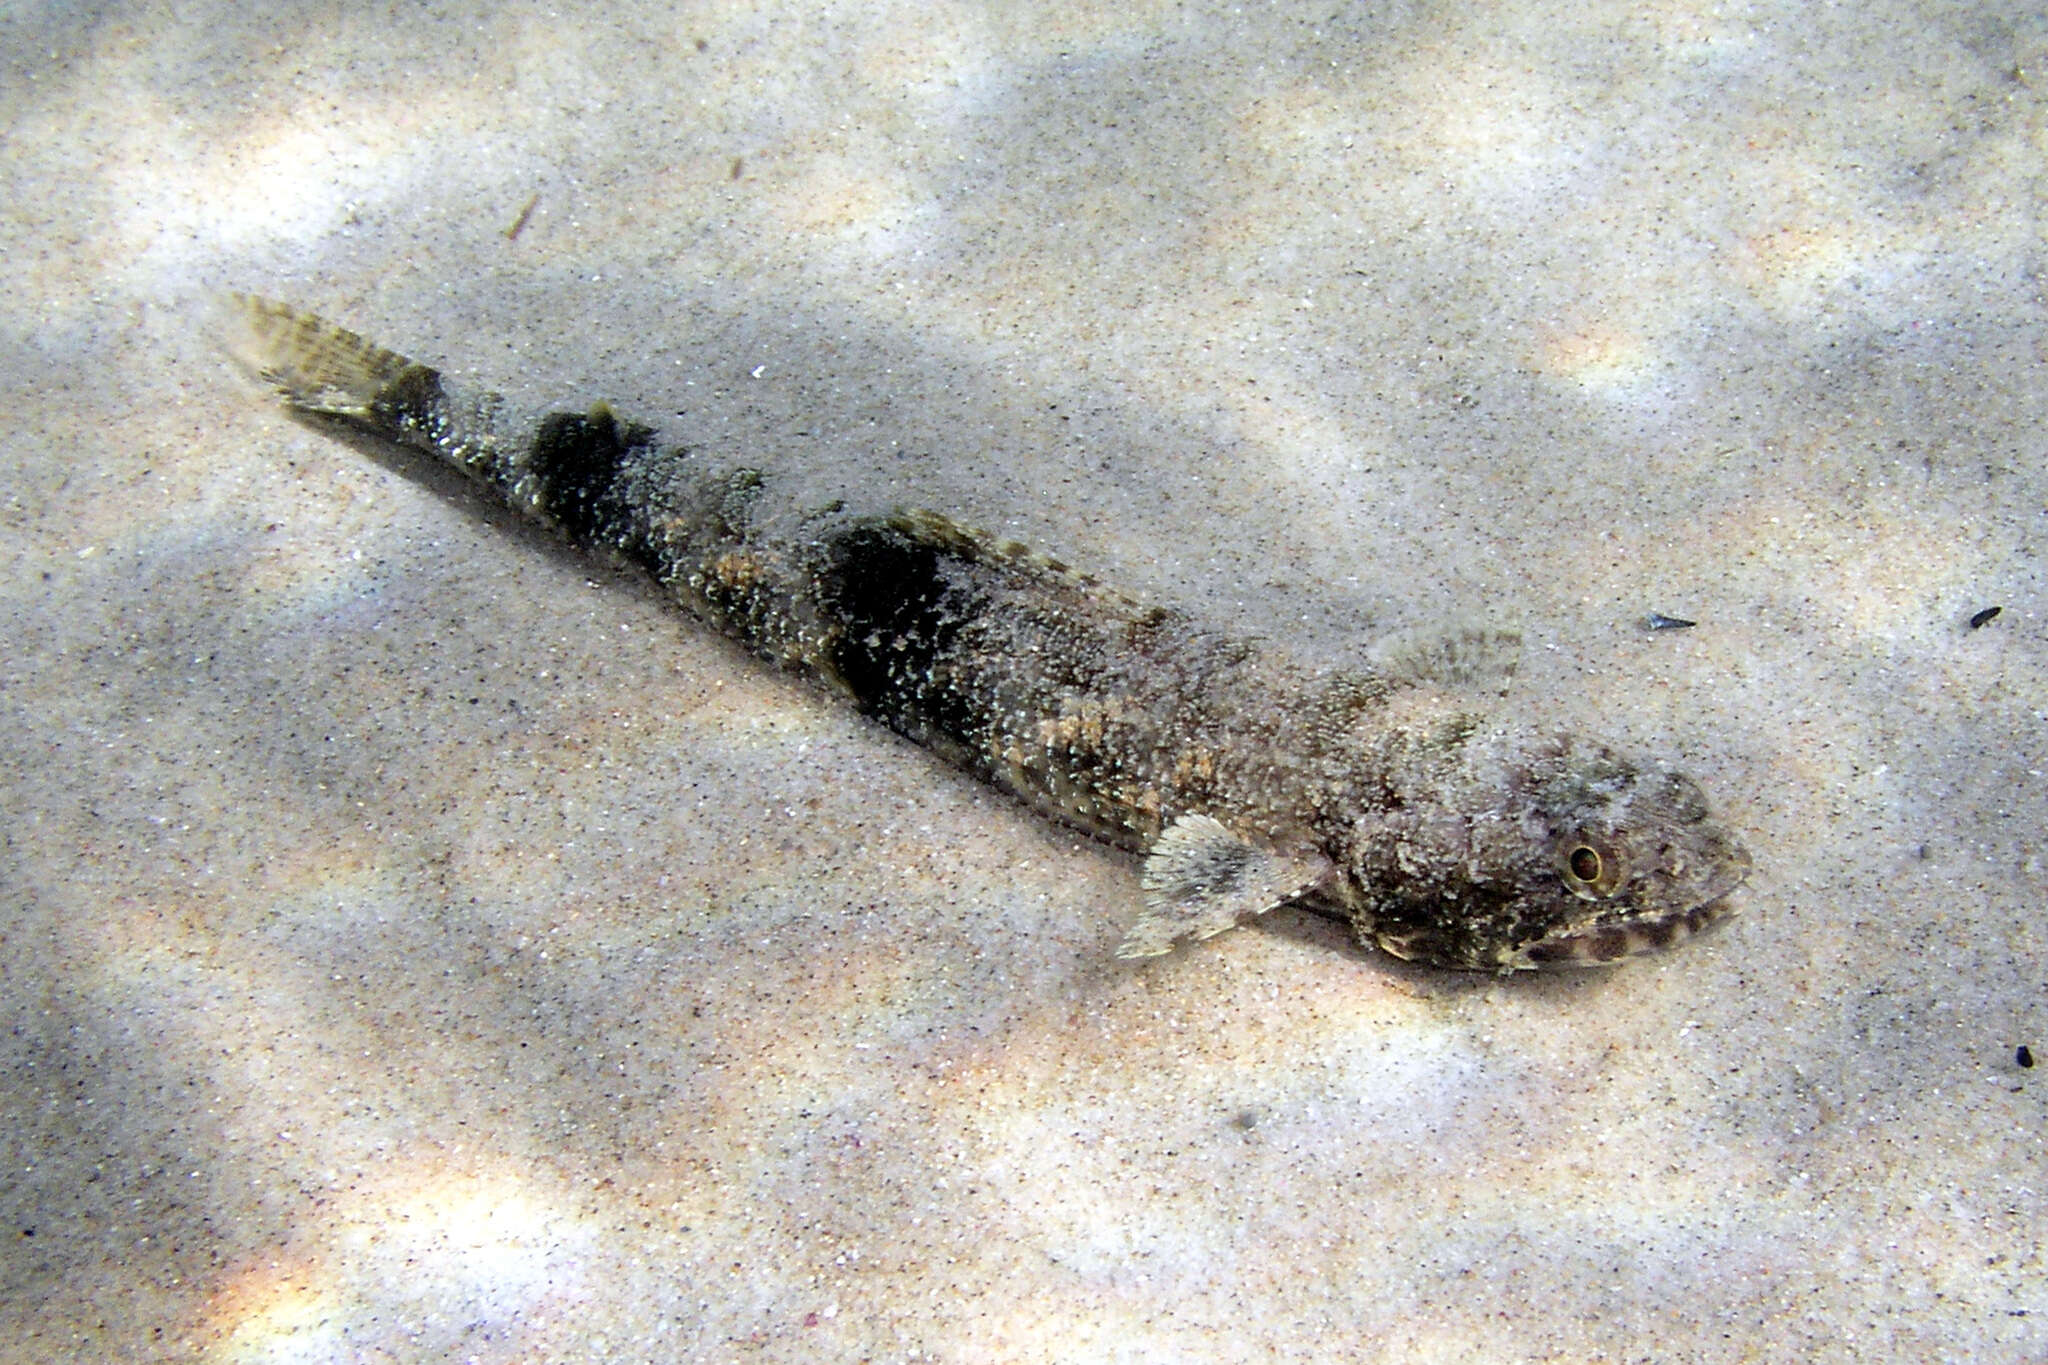 Image of Gracile lizardfish